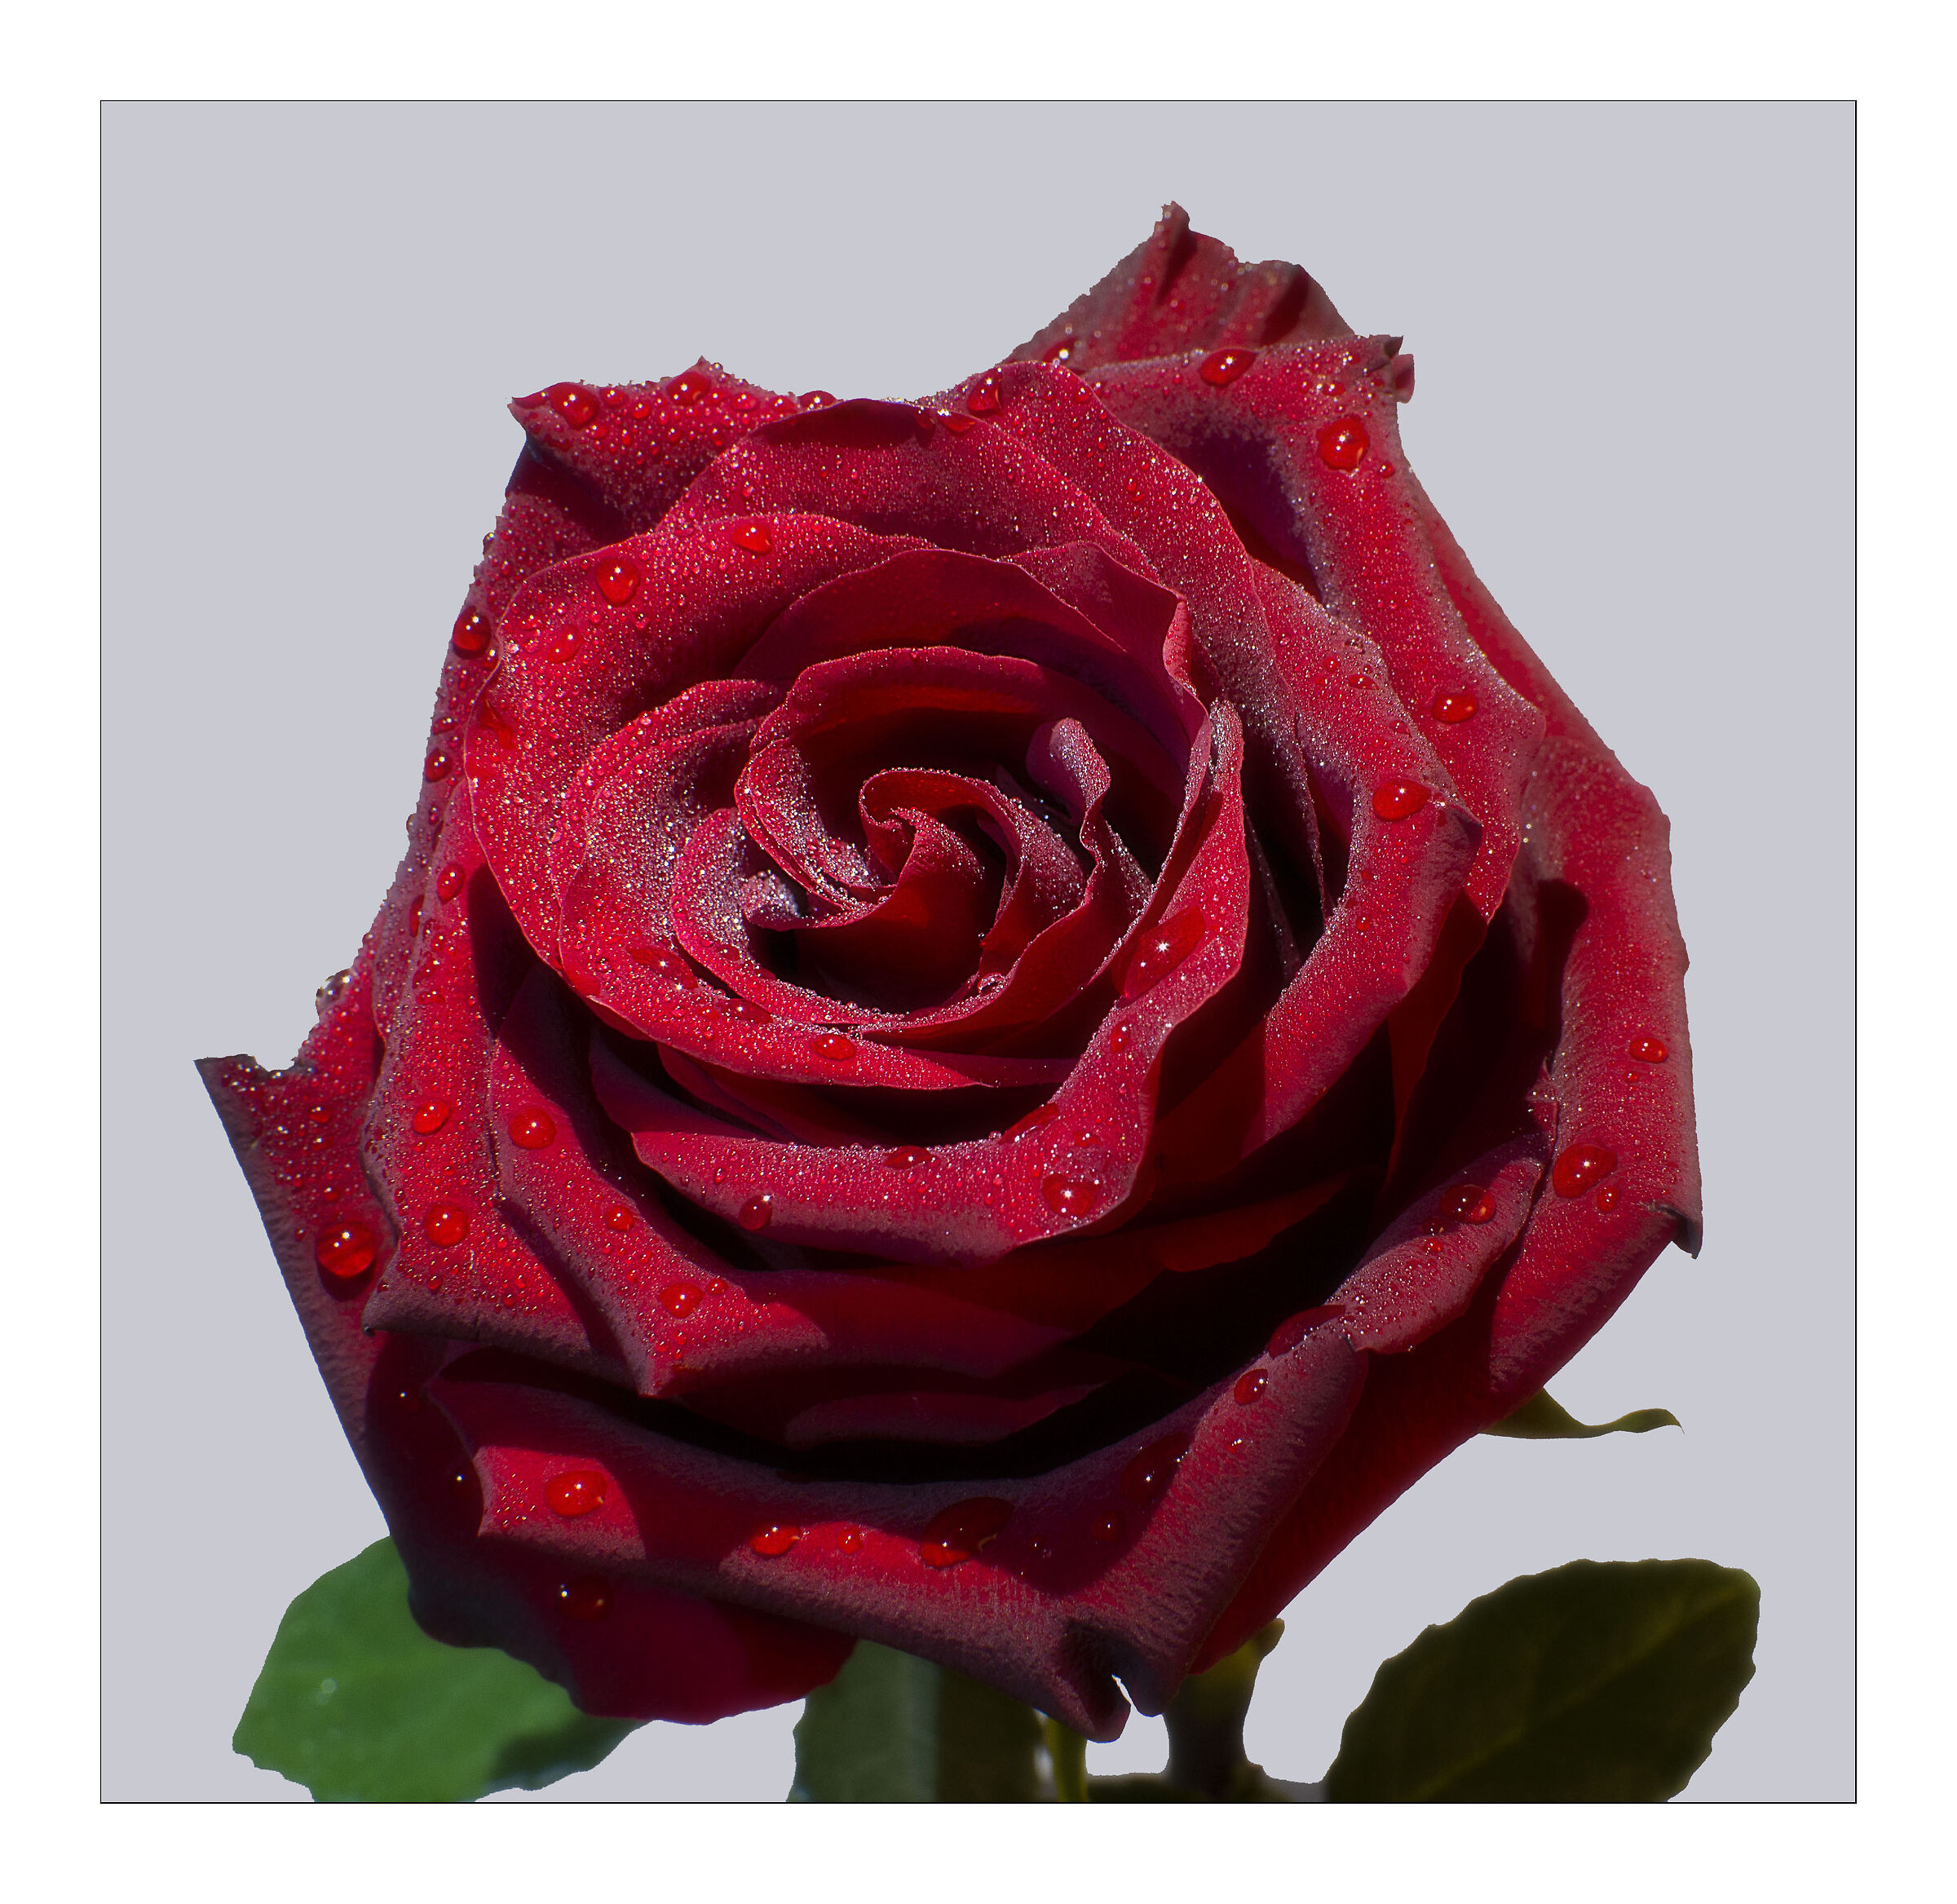 La Rosa, eterna regina dei fiori...